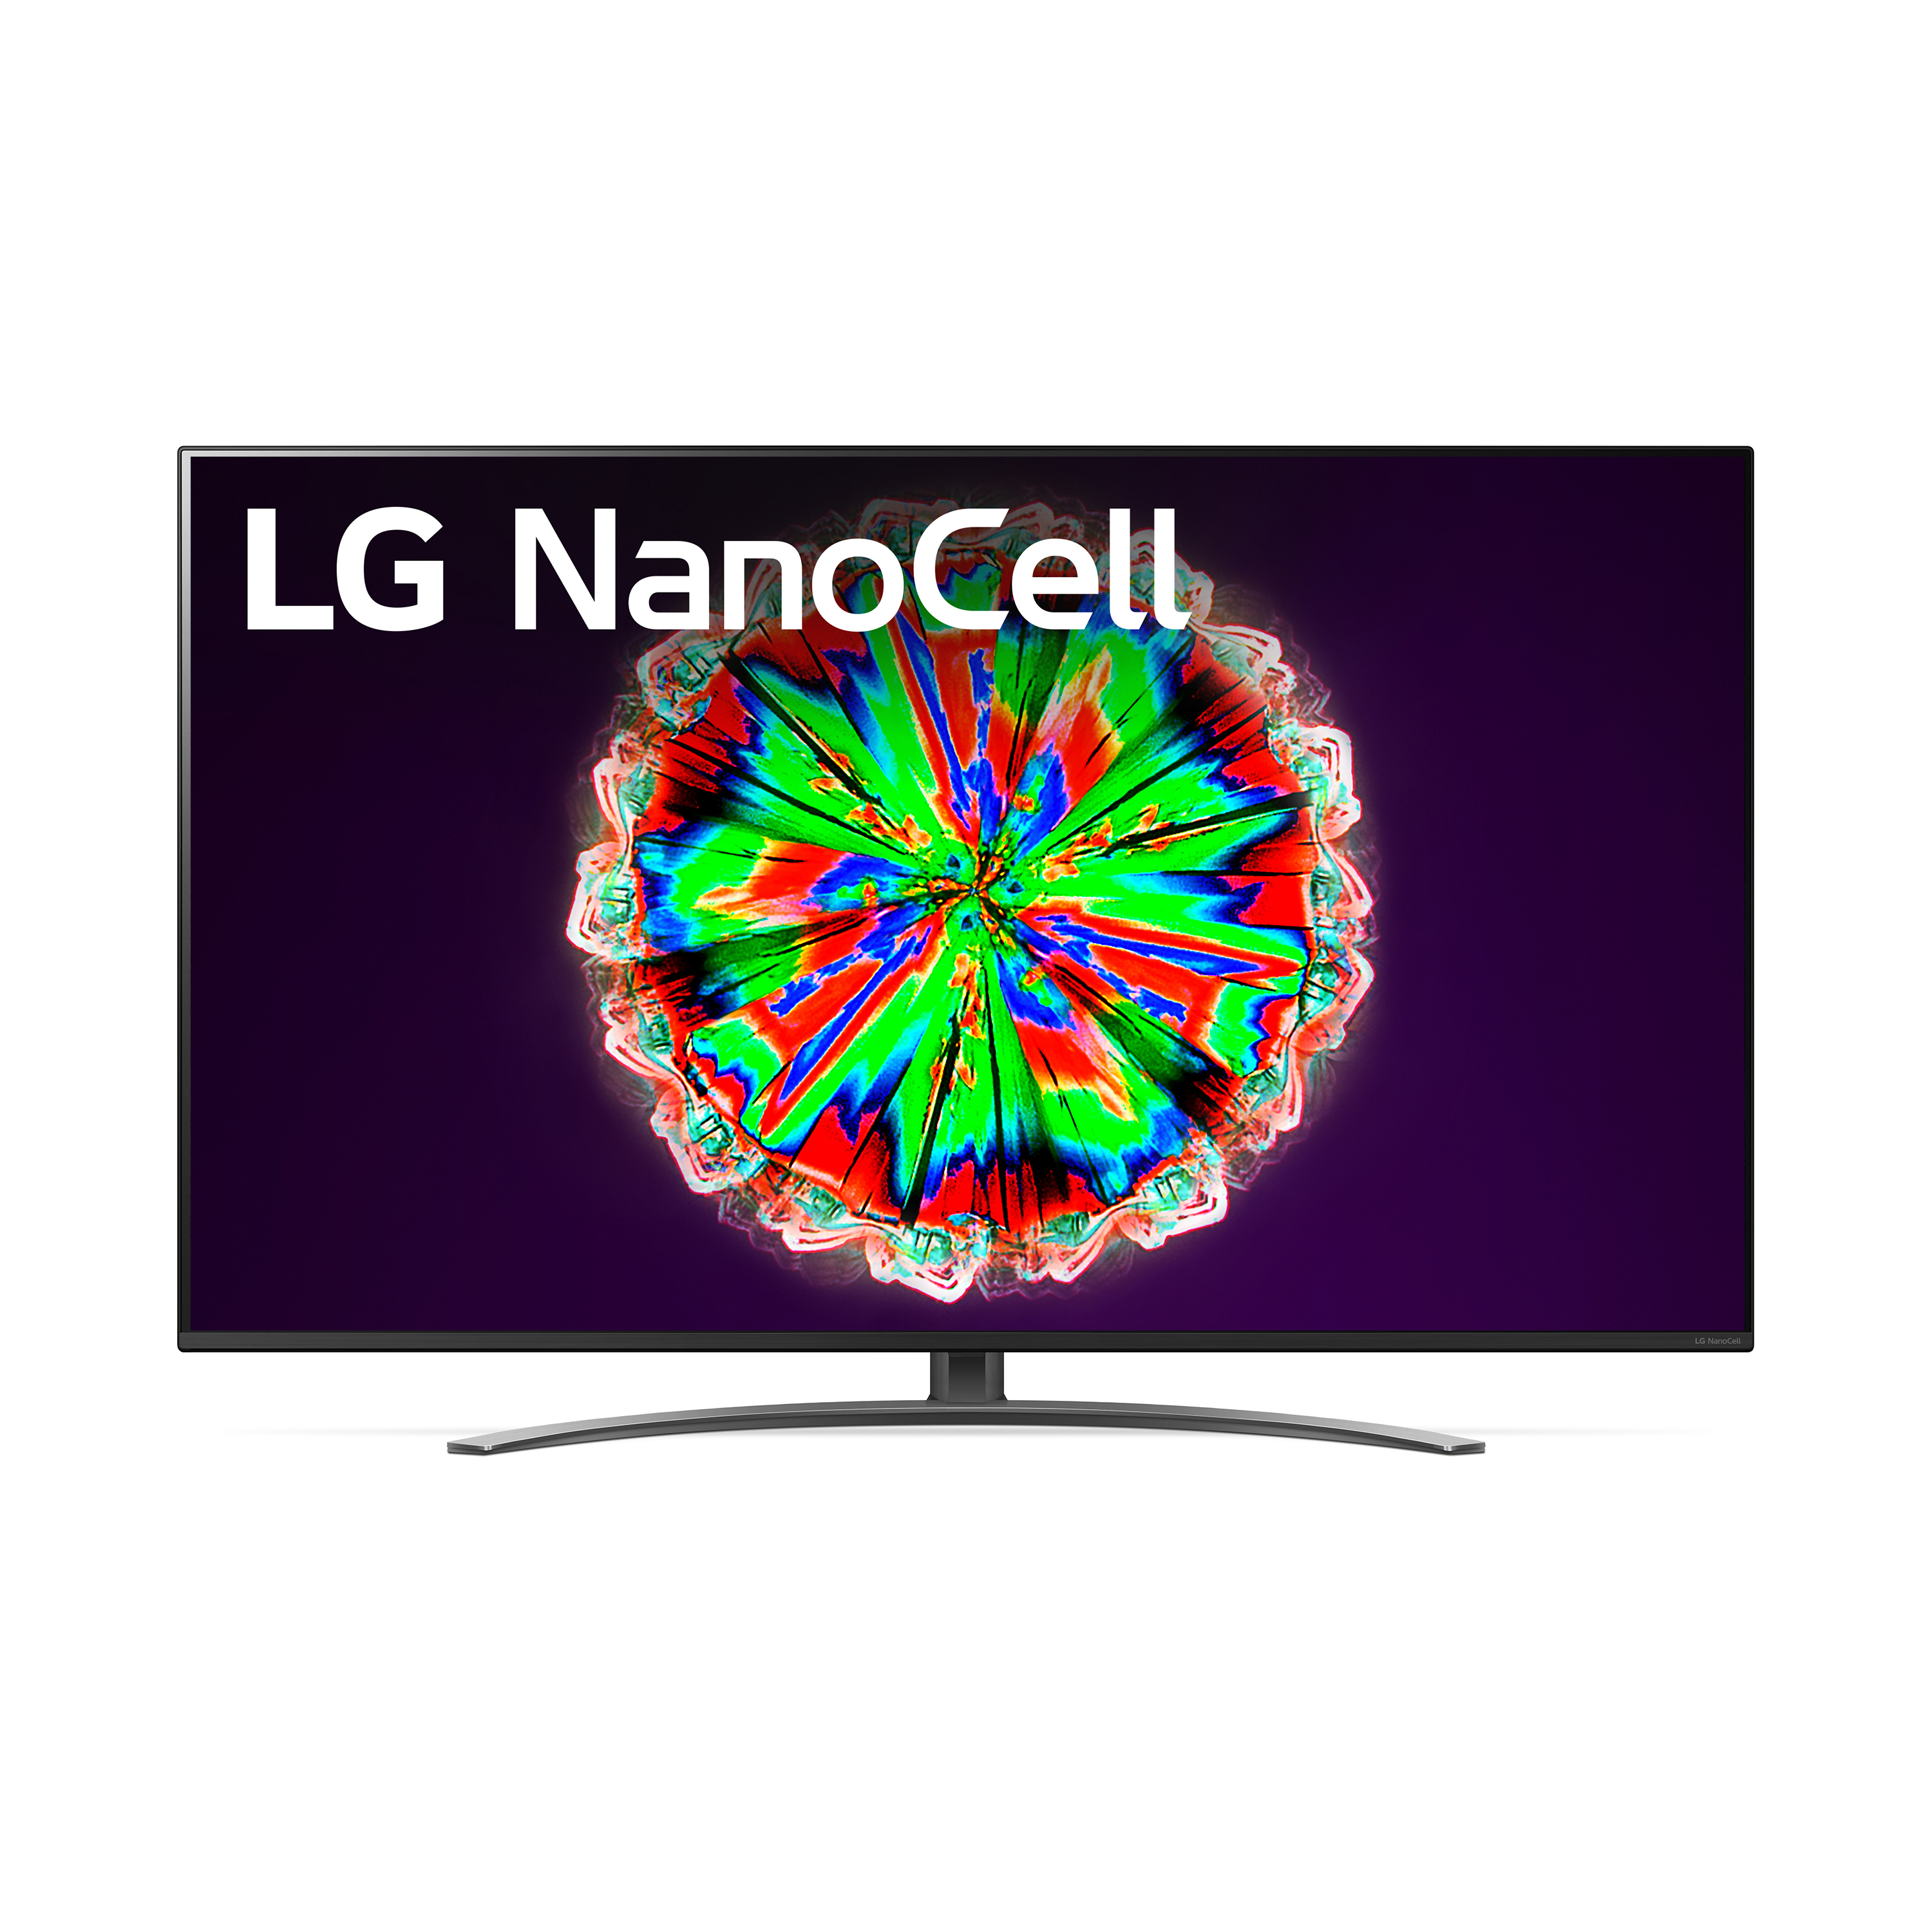 LG 55" Class 4K UHD 2160P NanoCell Smart TV with HDR 55NANO81UNA 2020 Model - image 1 of 30